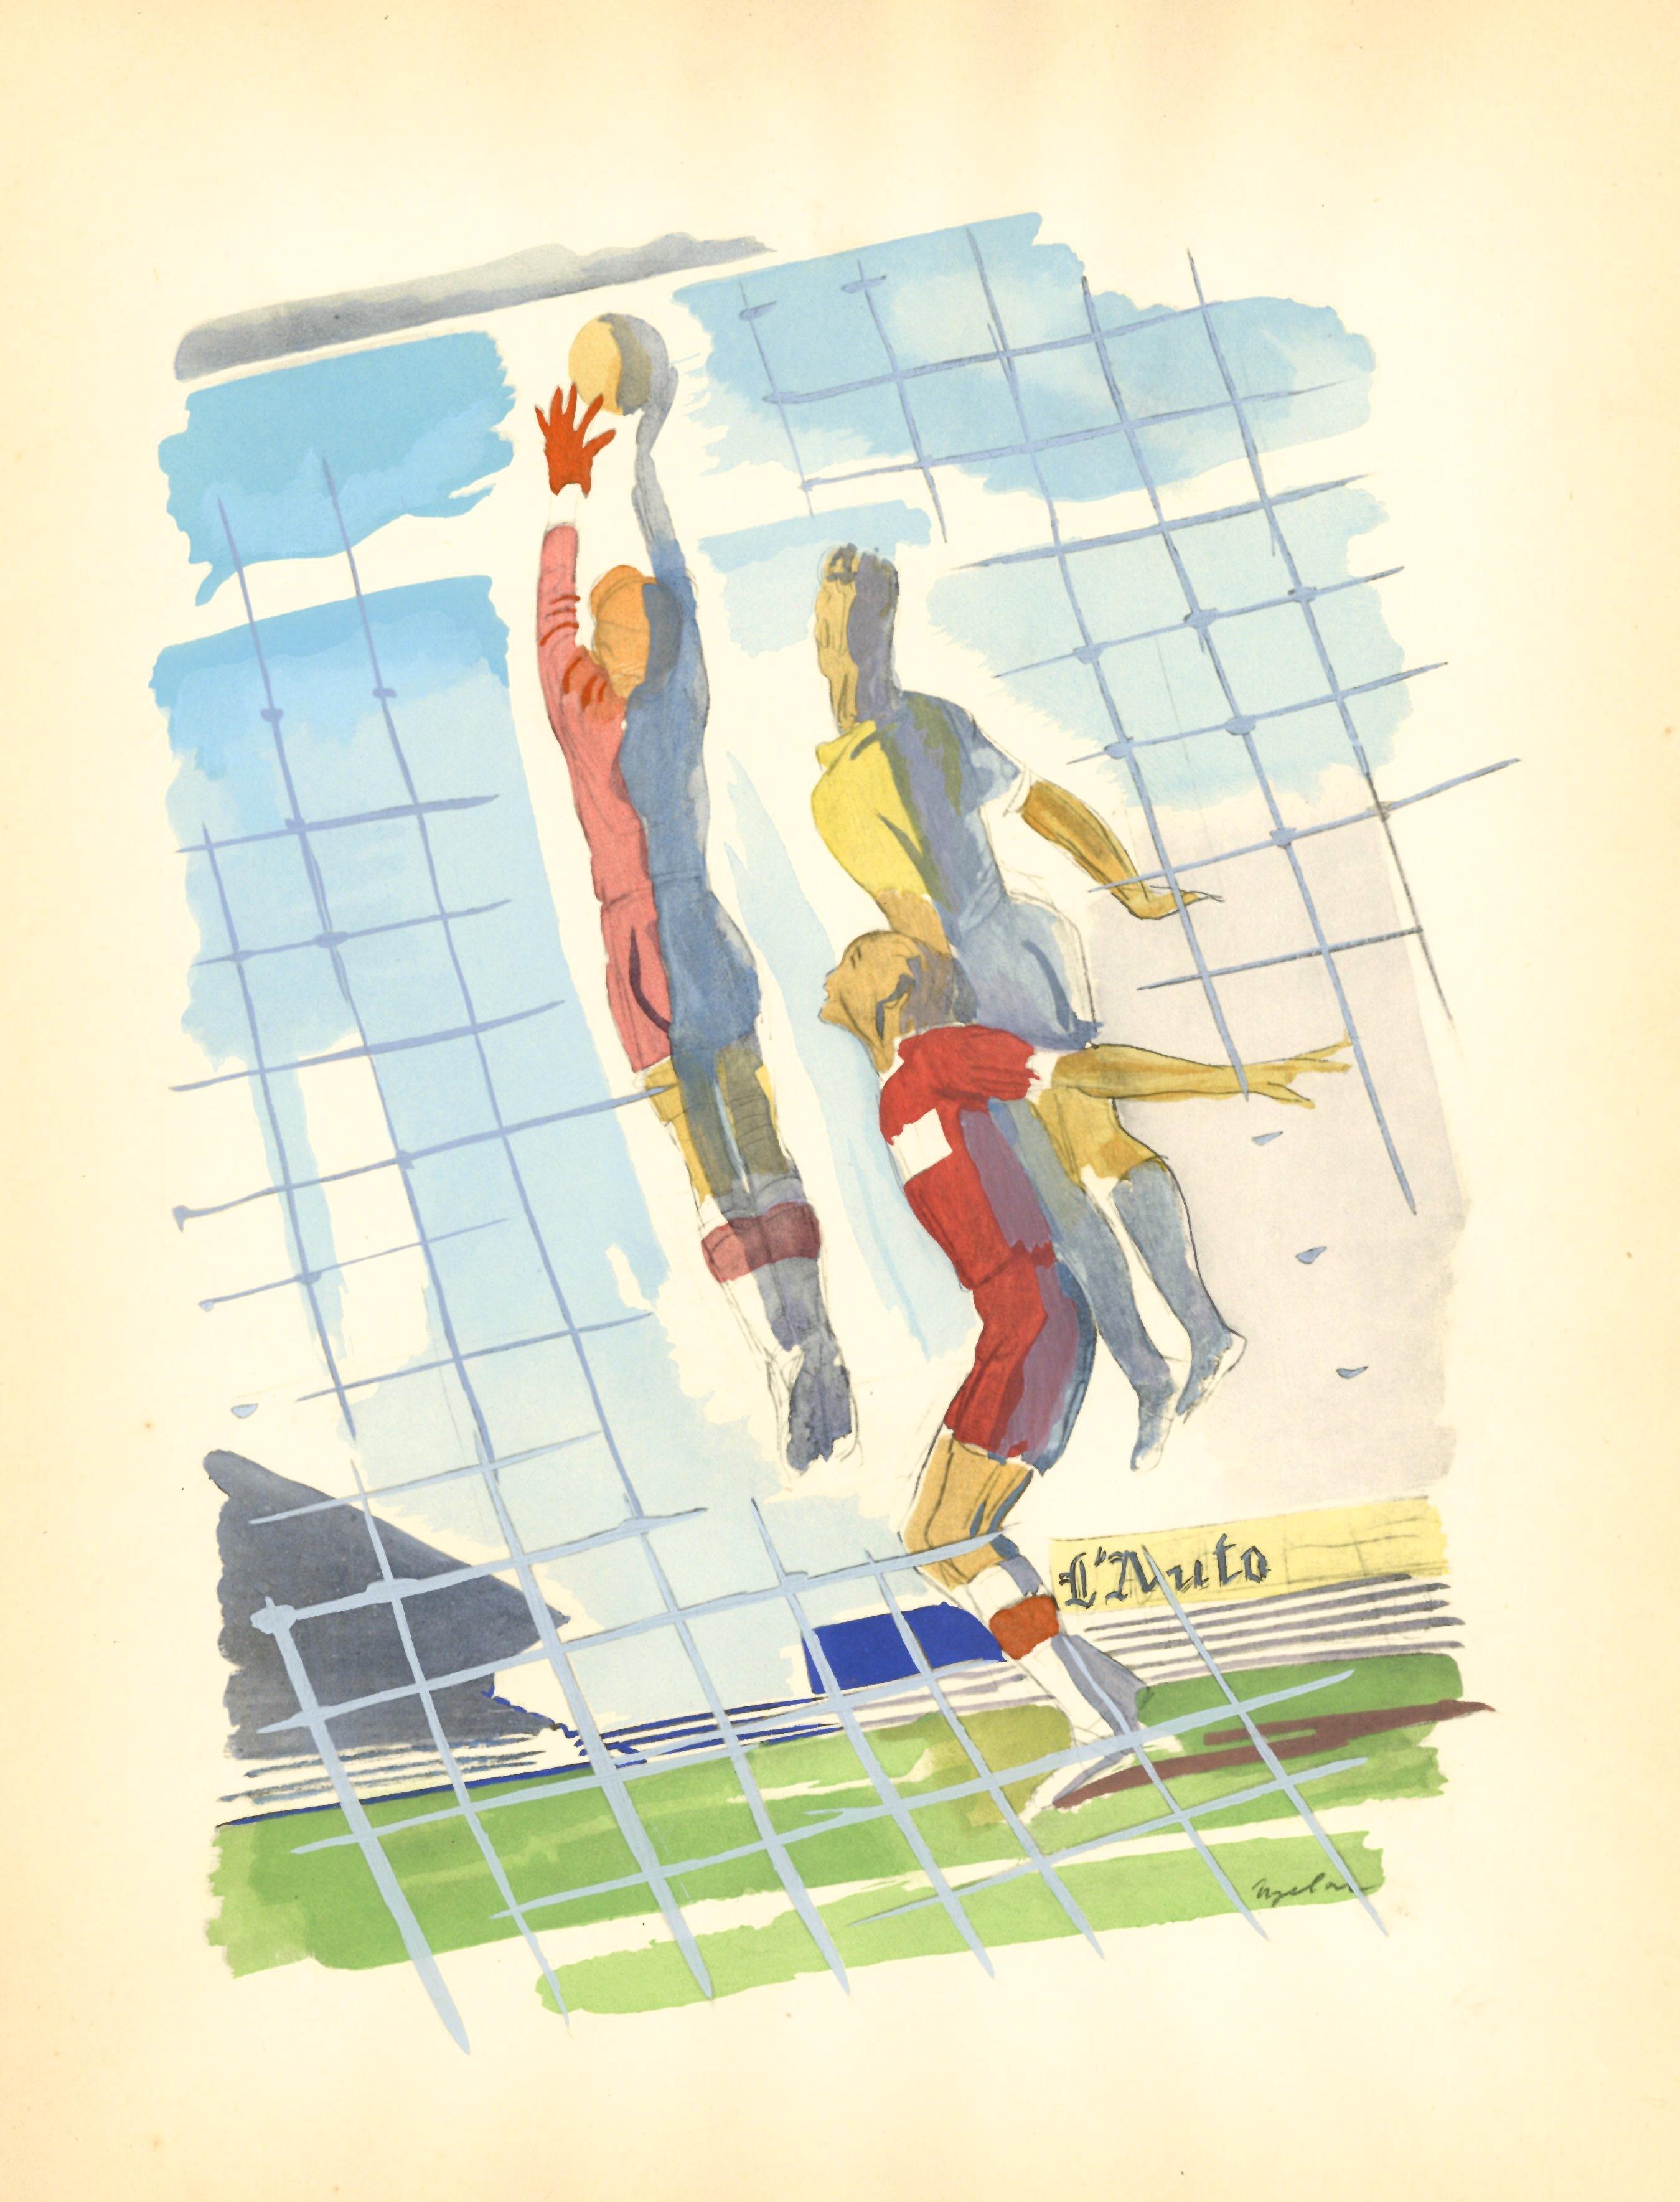 Pochoir „Le Football“ für Les Joies du Sport – Fußball – Print von Milivoy Uzelac